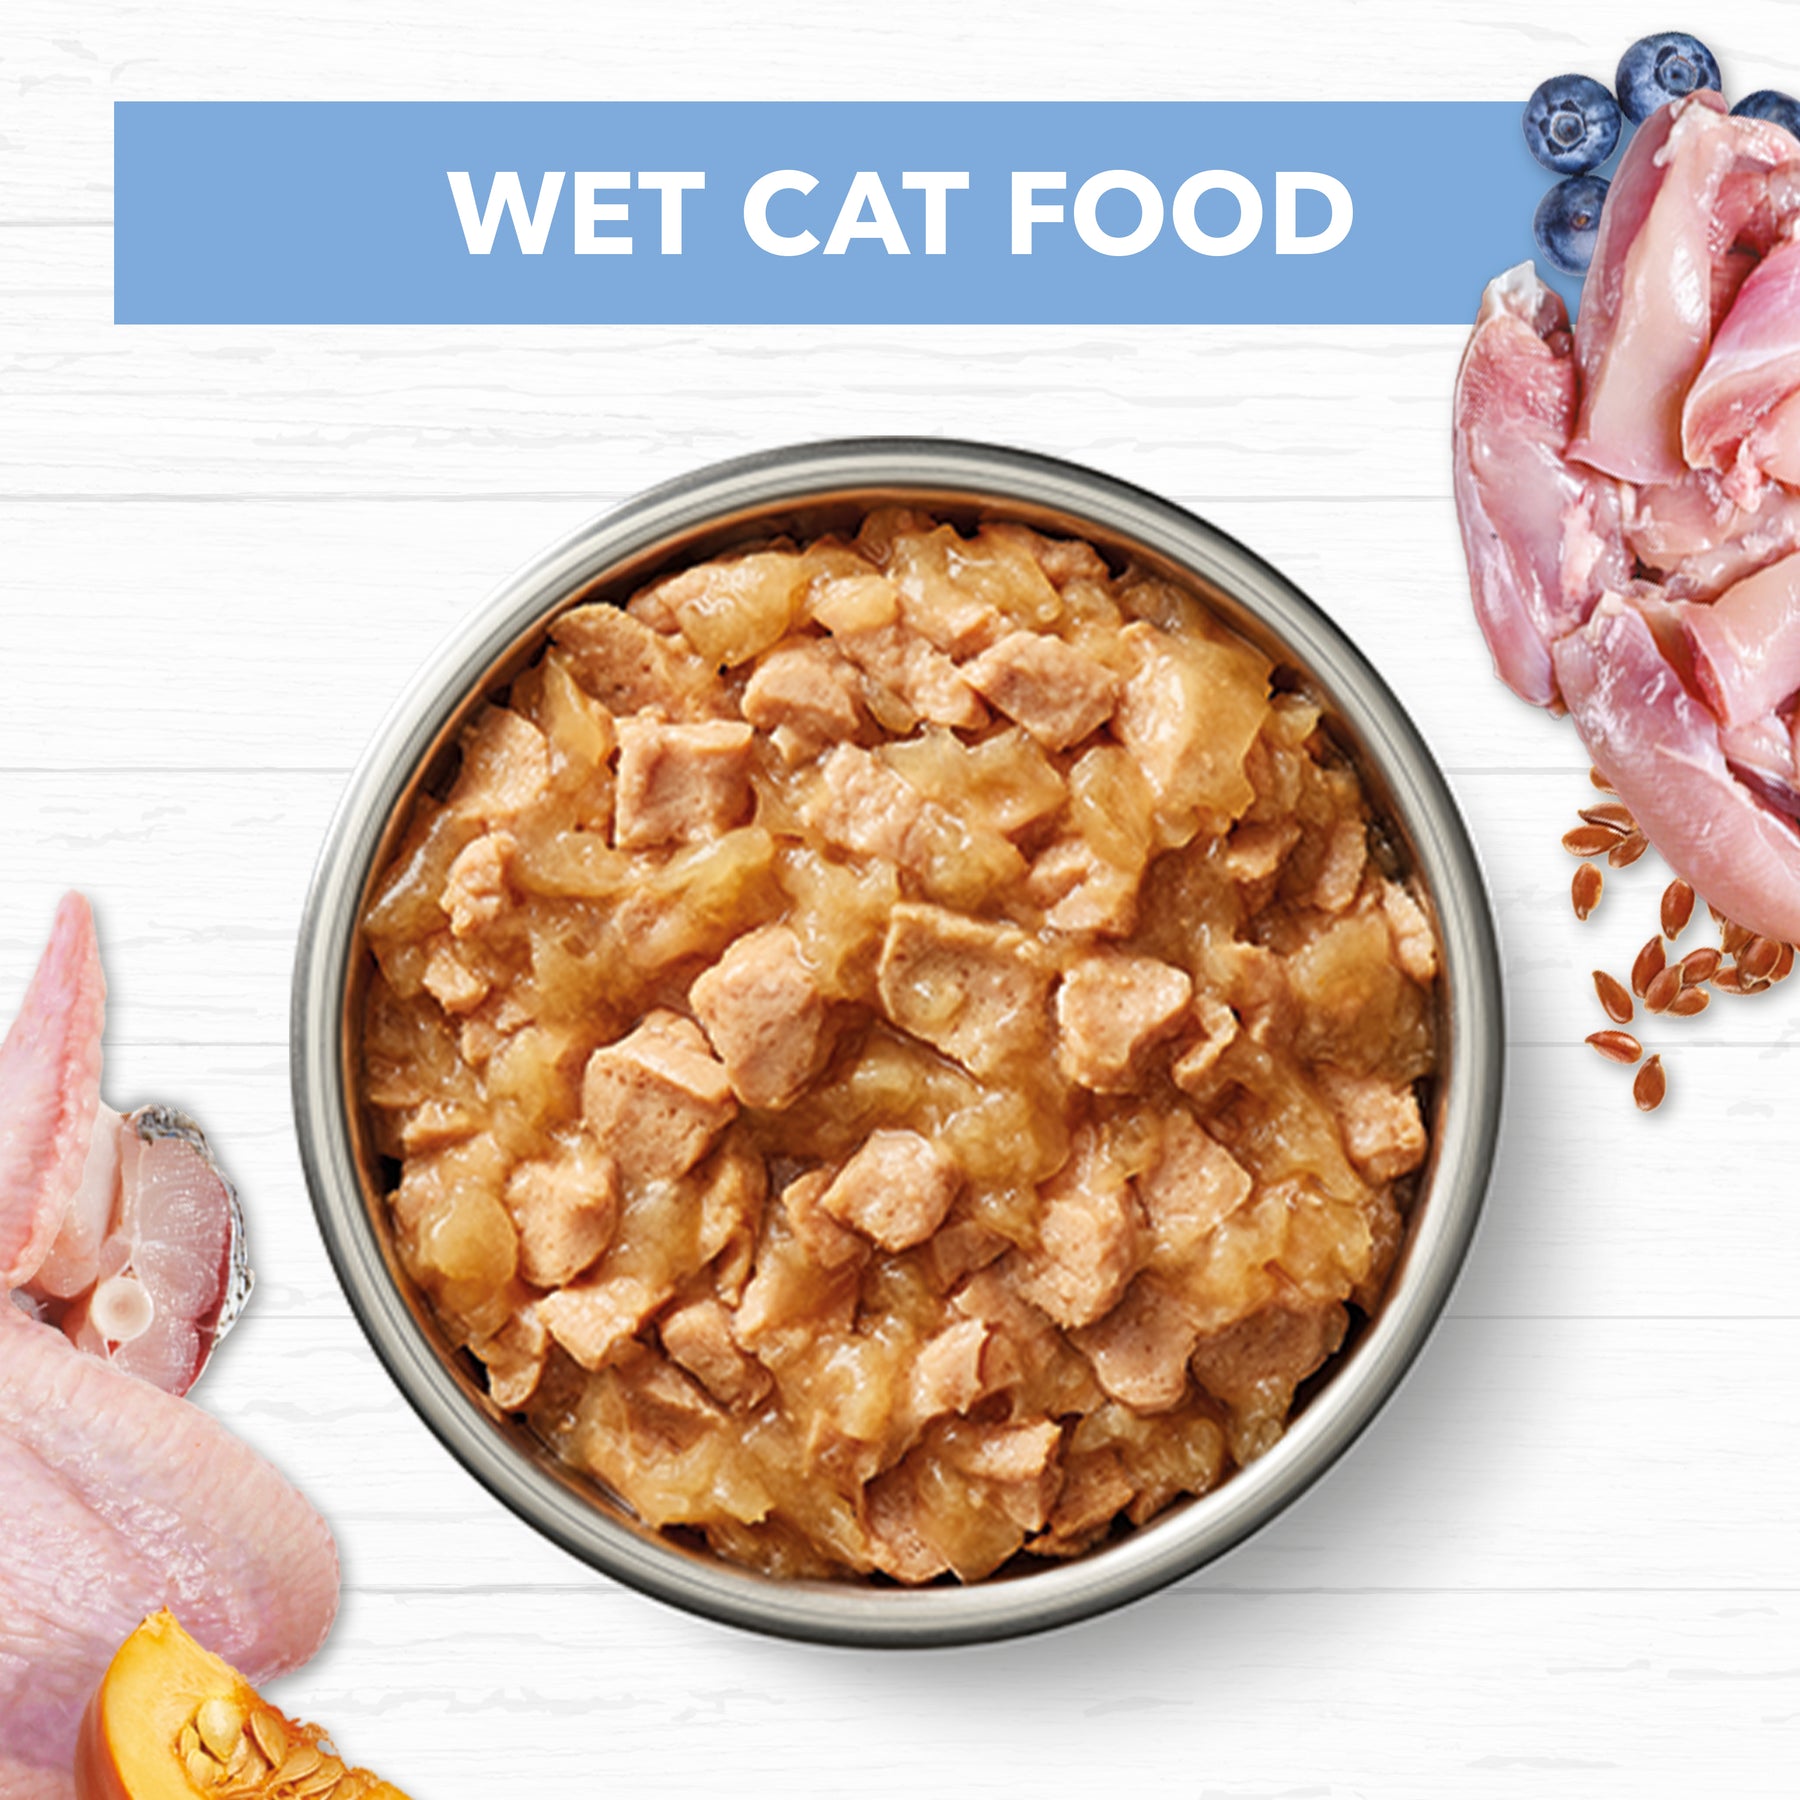 Grain Free Kitten Wet Cat Food Chicken & Ocean Fish in Jelly 85g